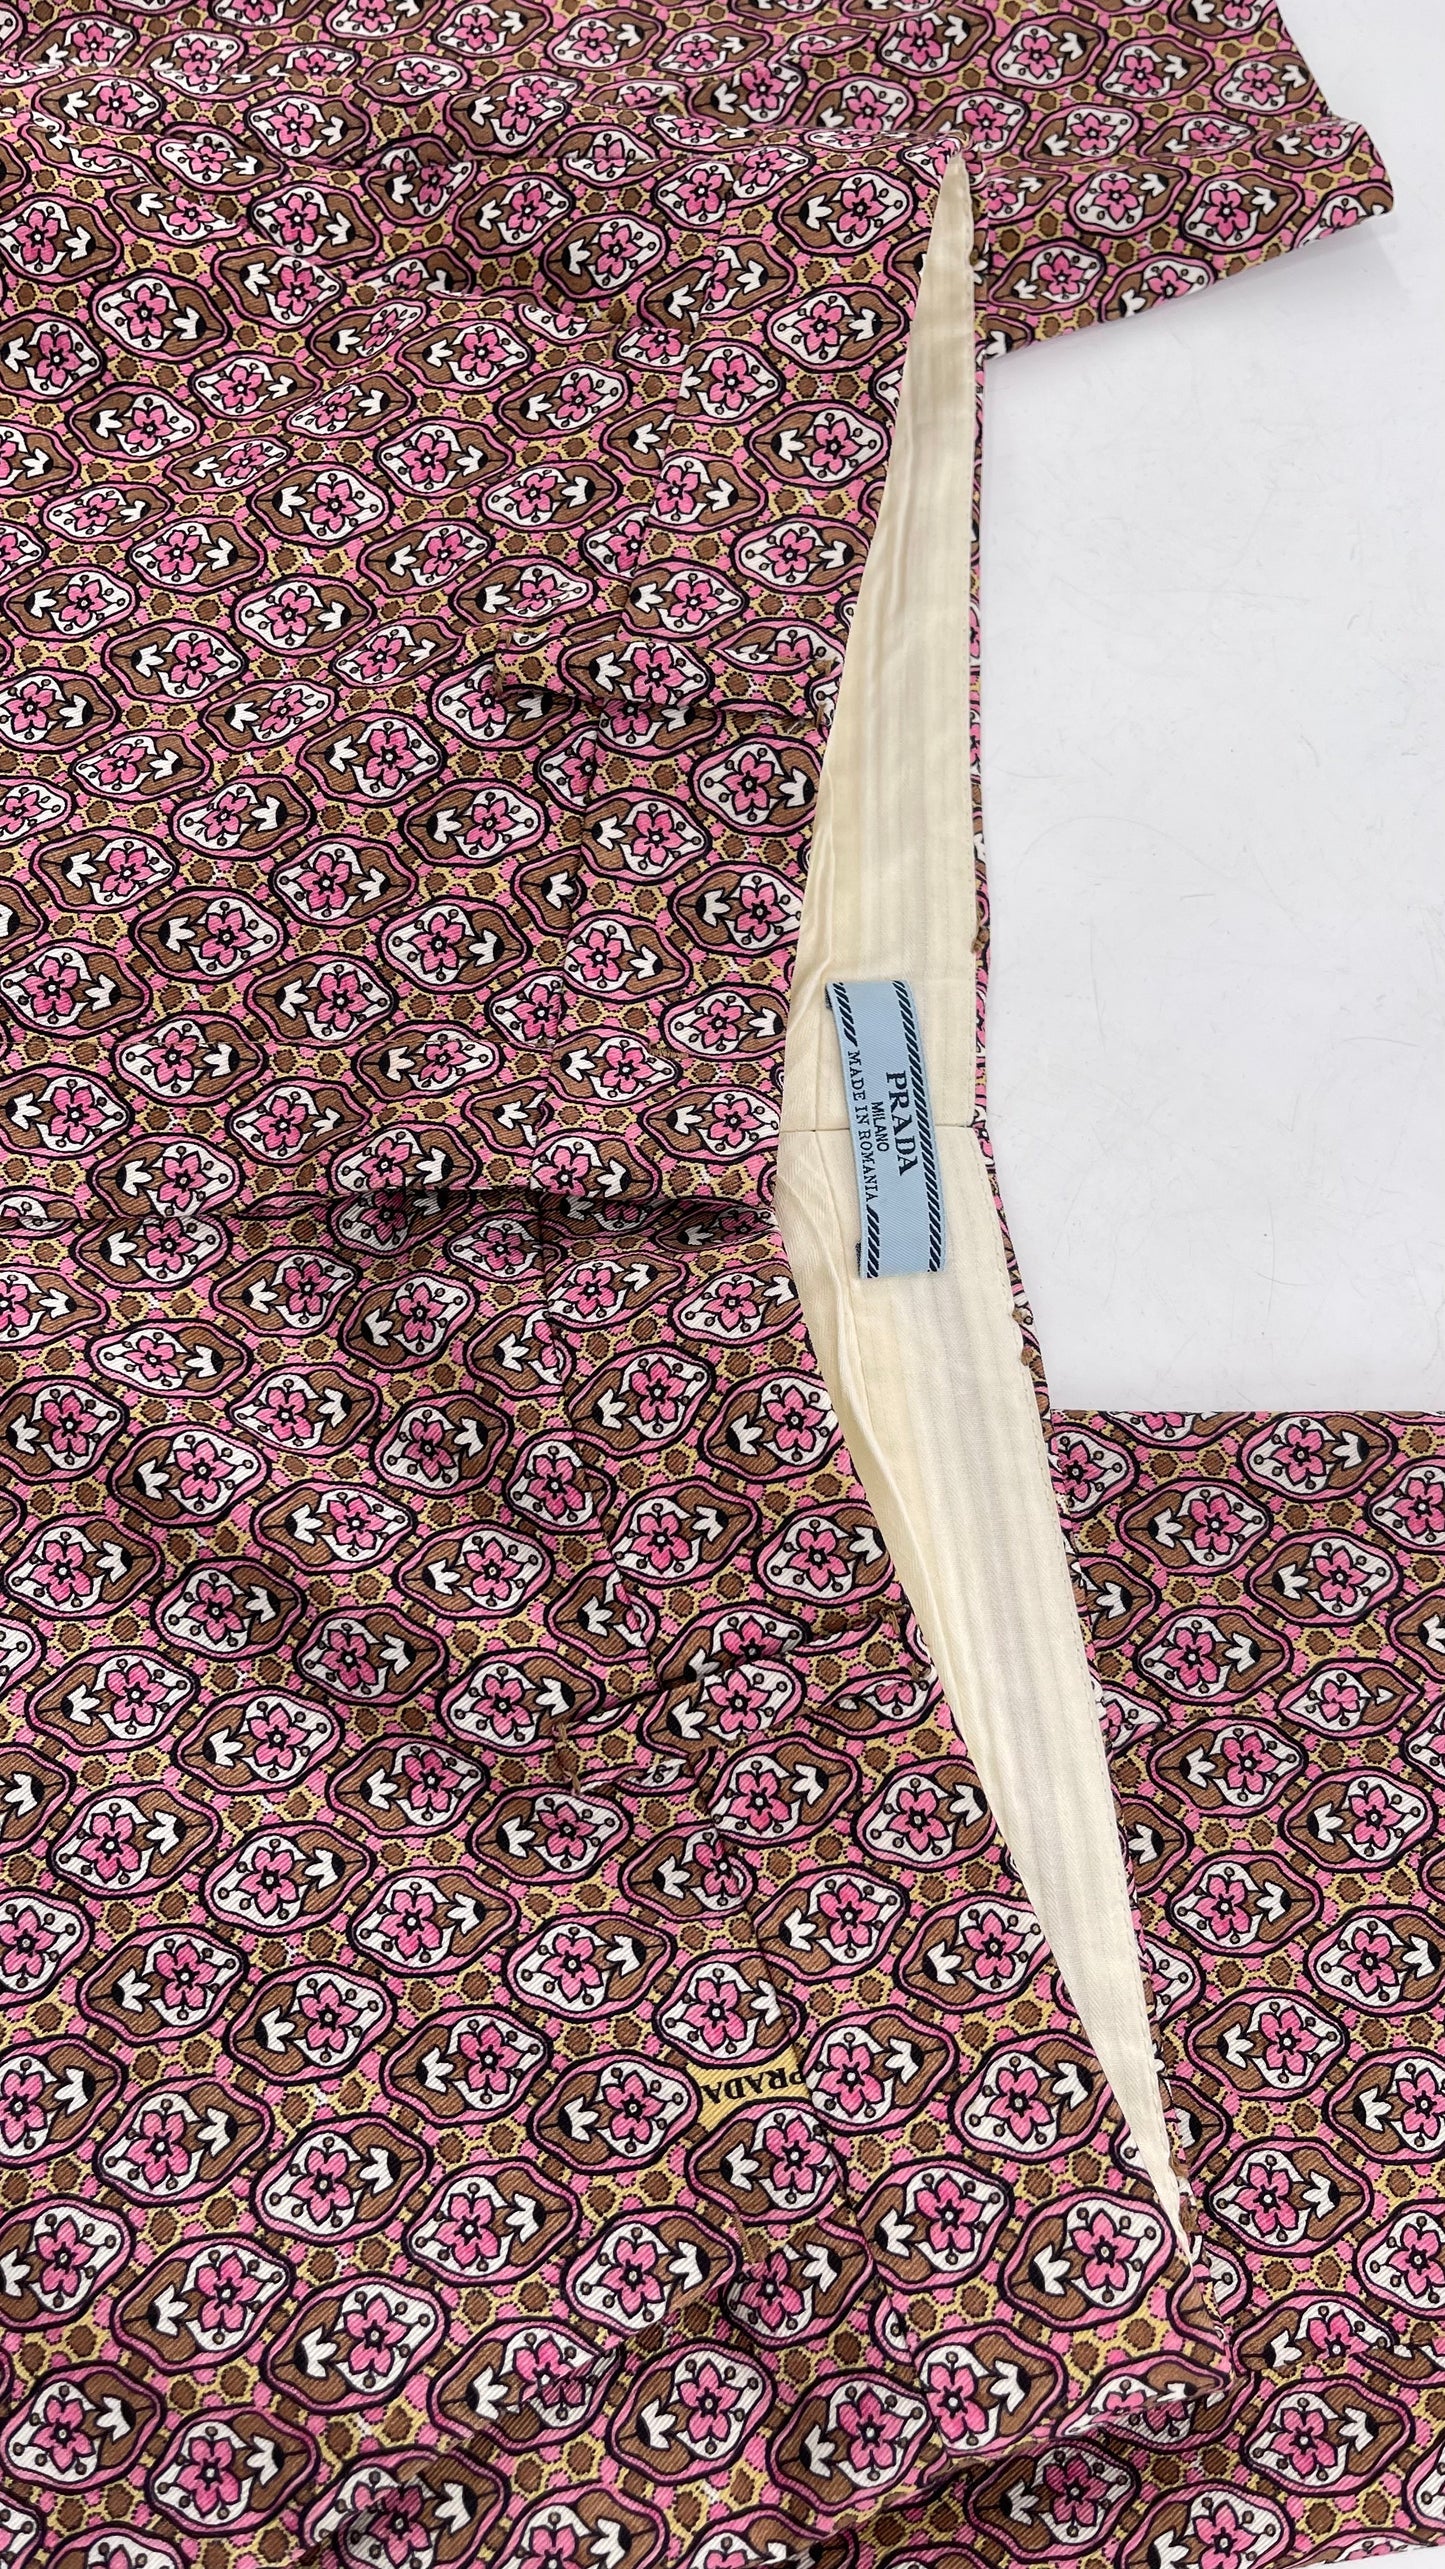 Vintage PRADA Trouser Brown Pink 1970s Style Pattern (28)